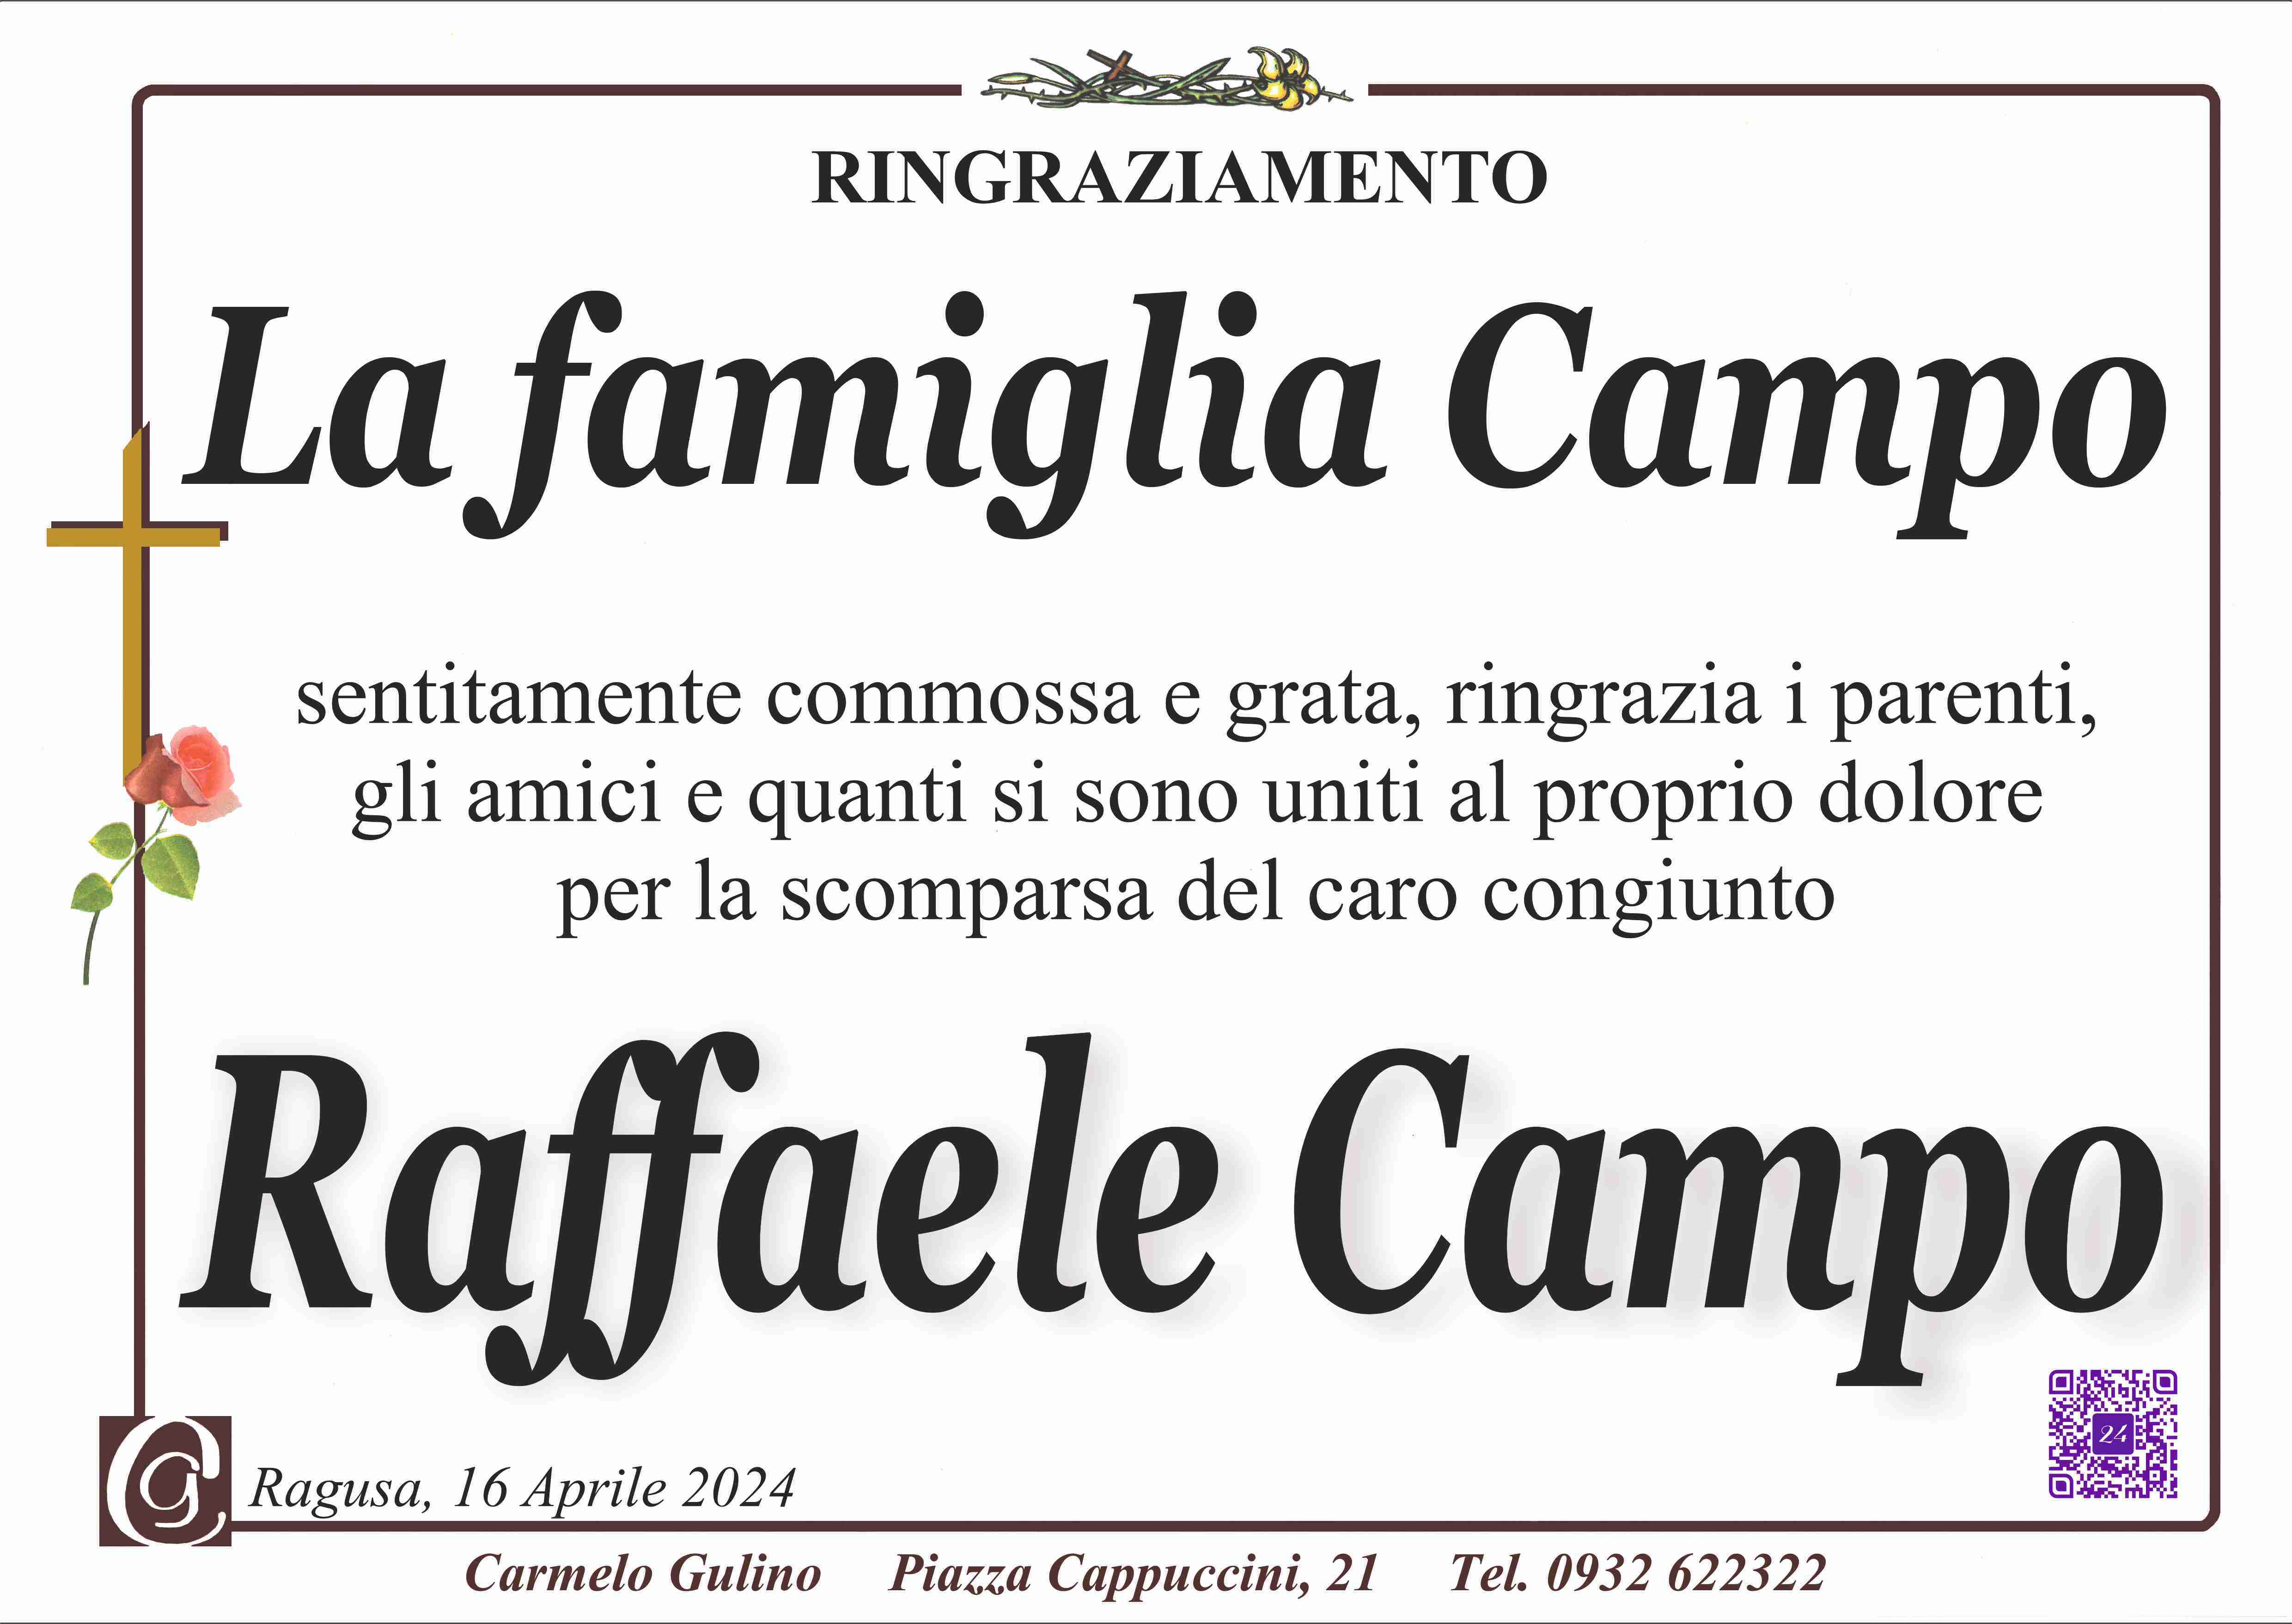 Raffaele Campo